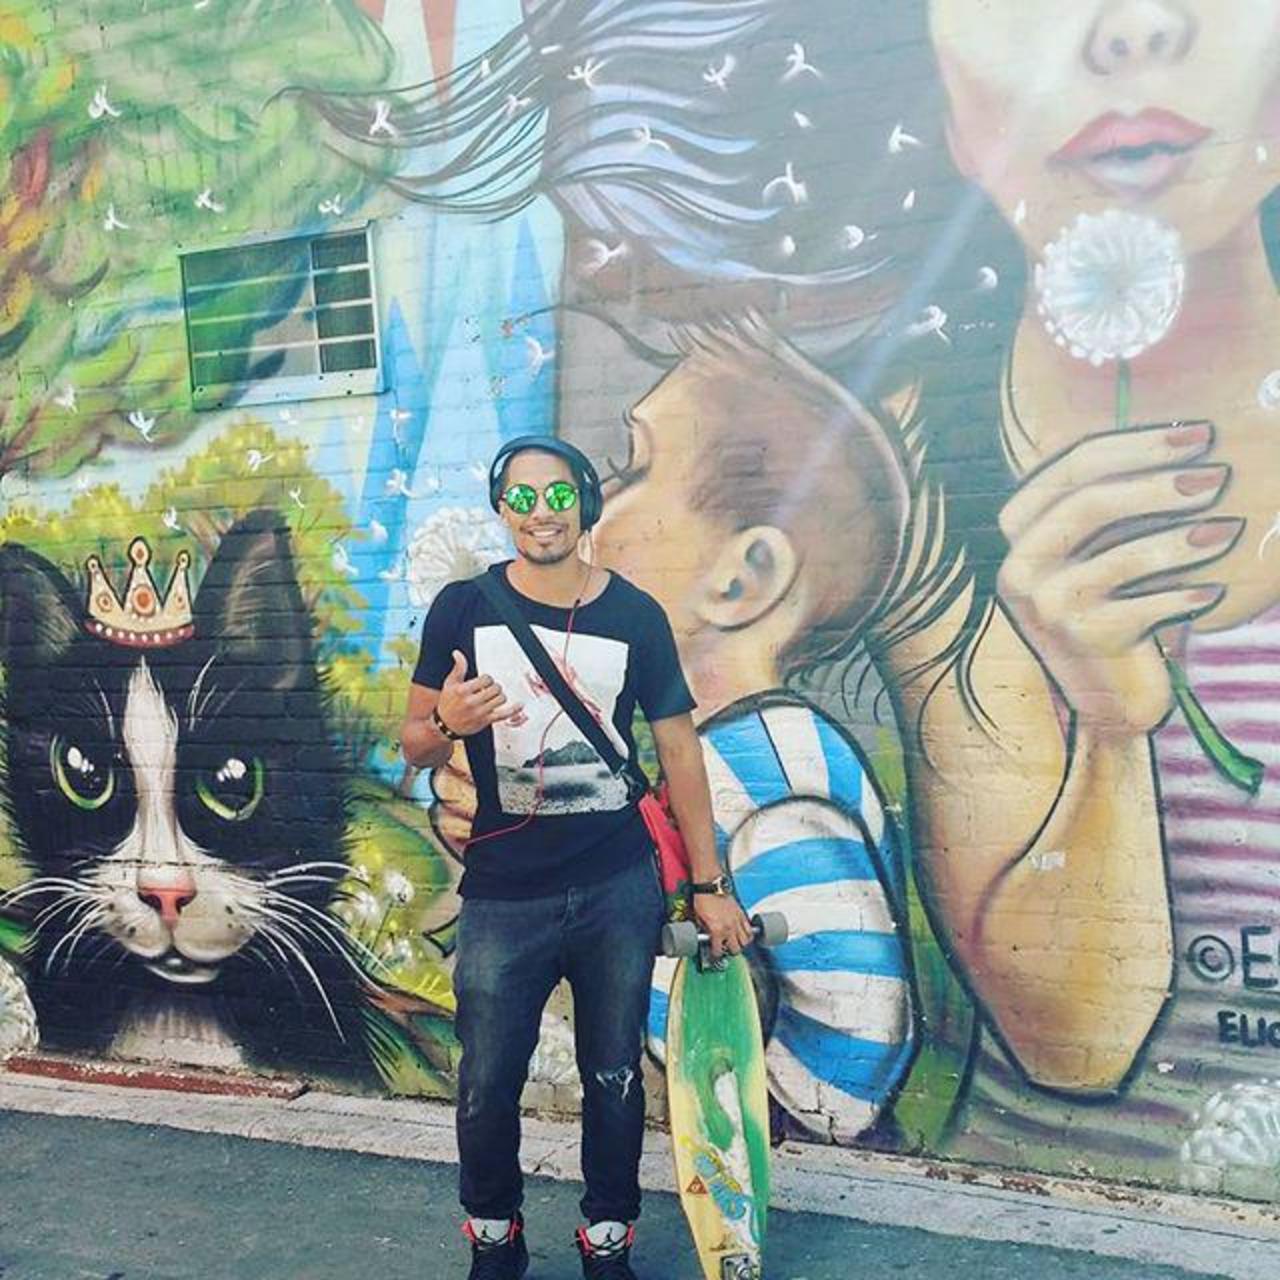 Kori + Art = Kart #wethenorth #graffiti #art #wallart #painting #painter #artist #mural #toronto #stencilart #spray… http://t.co/FEItBHxDbA